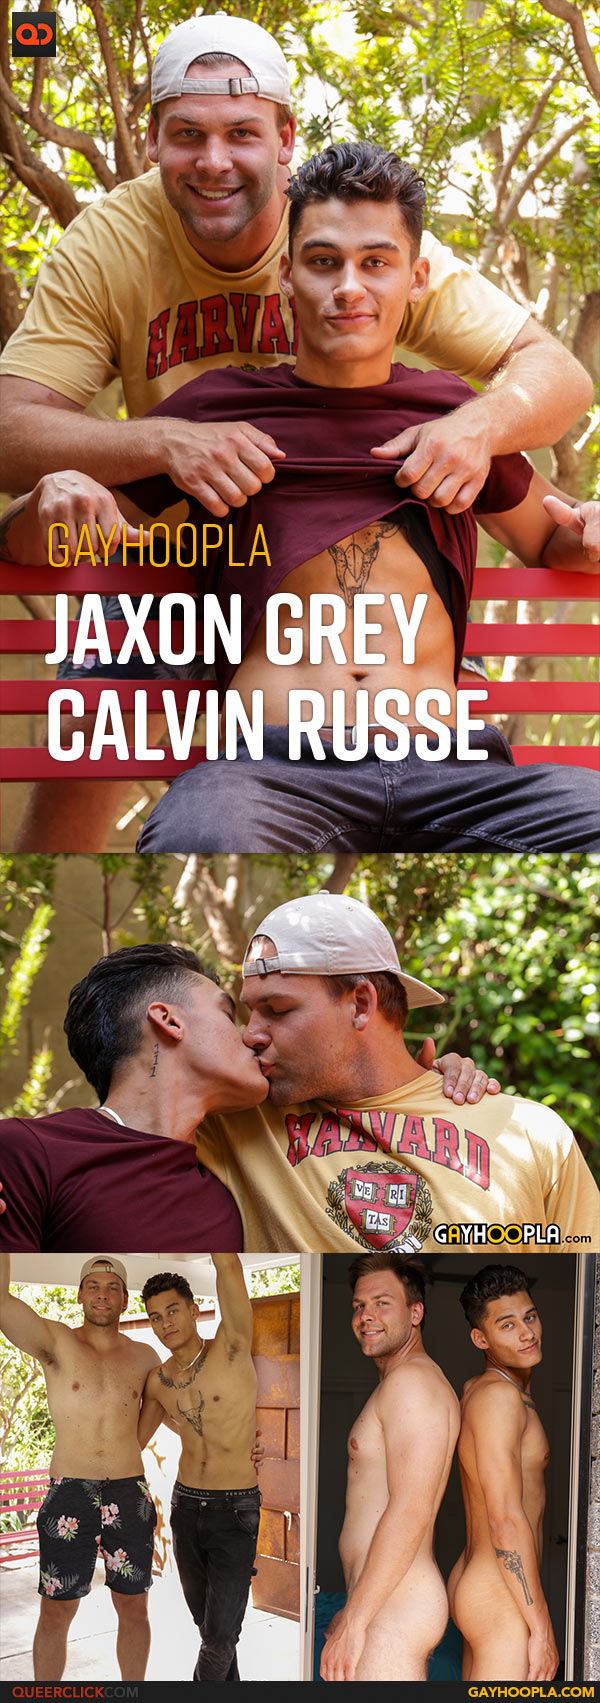 Gayhoopla: Jaxon Grey Fucks Calvin Russe - Jaxon Bends Over Calvin and Makes Him Cum From His Strokes